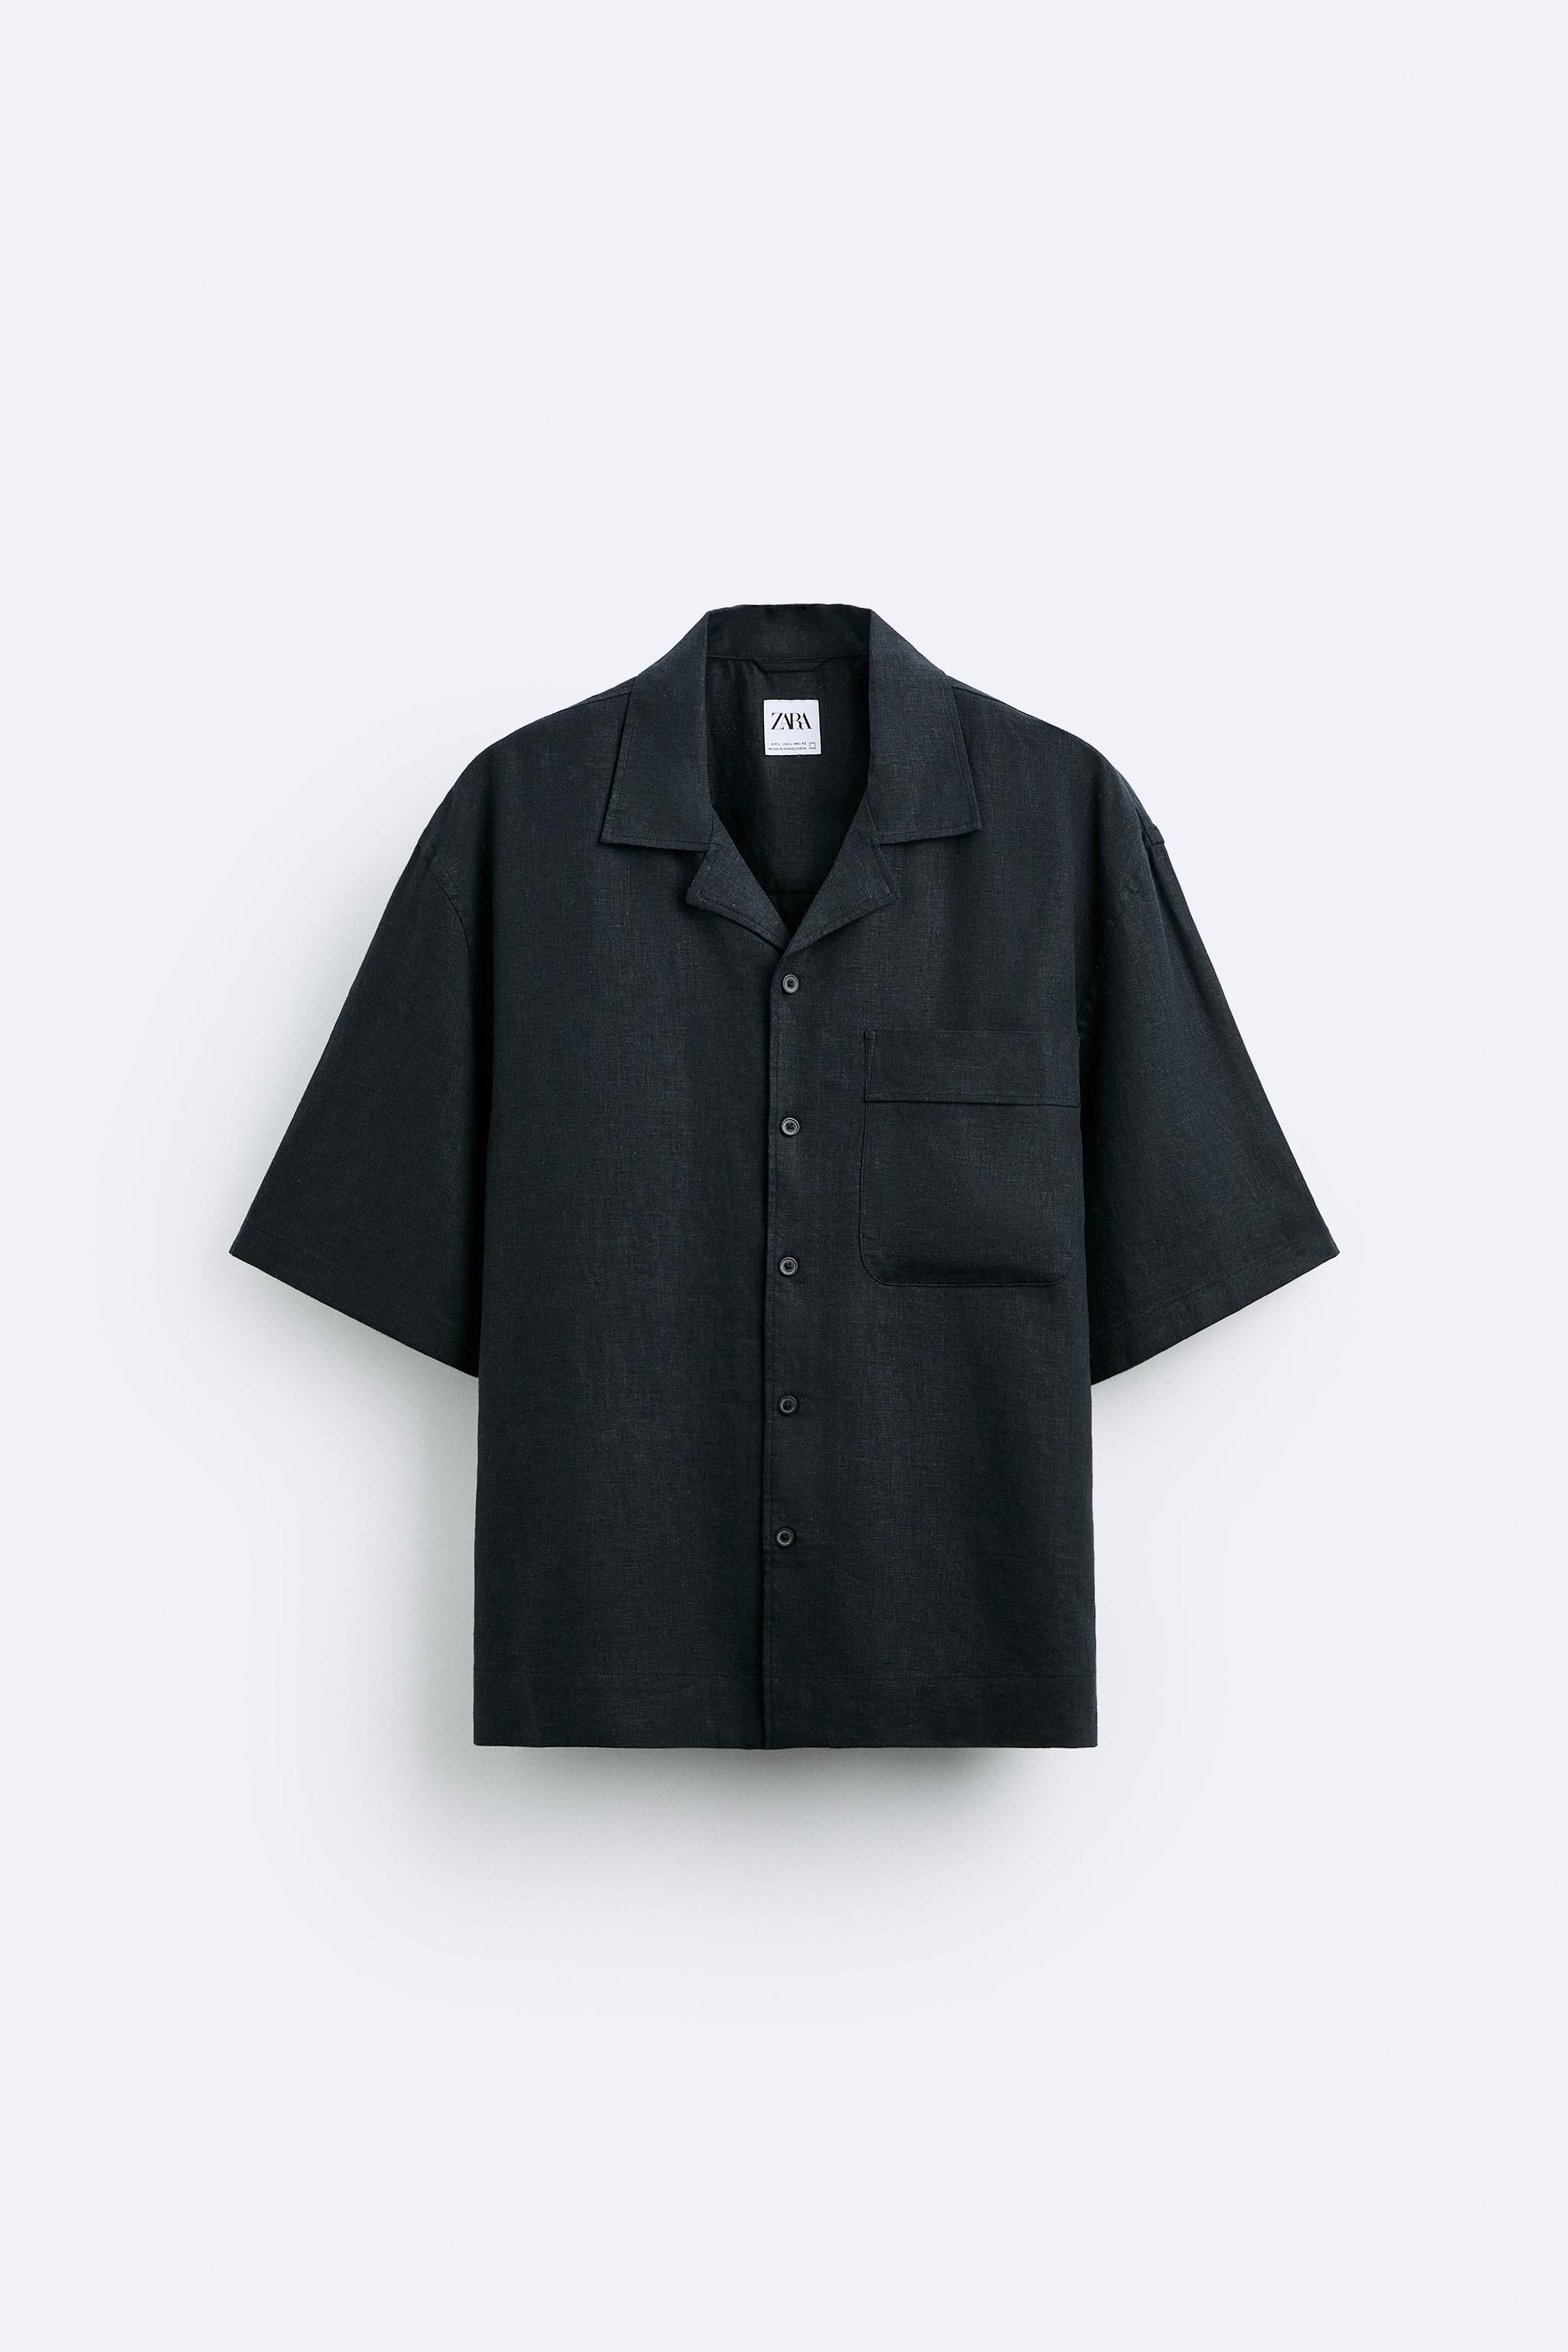 Рубашка Zara Viscose/linen Blend, черный рубашка zara linen cotton blend синий